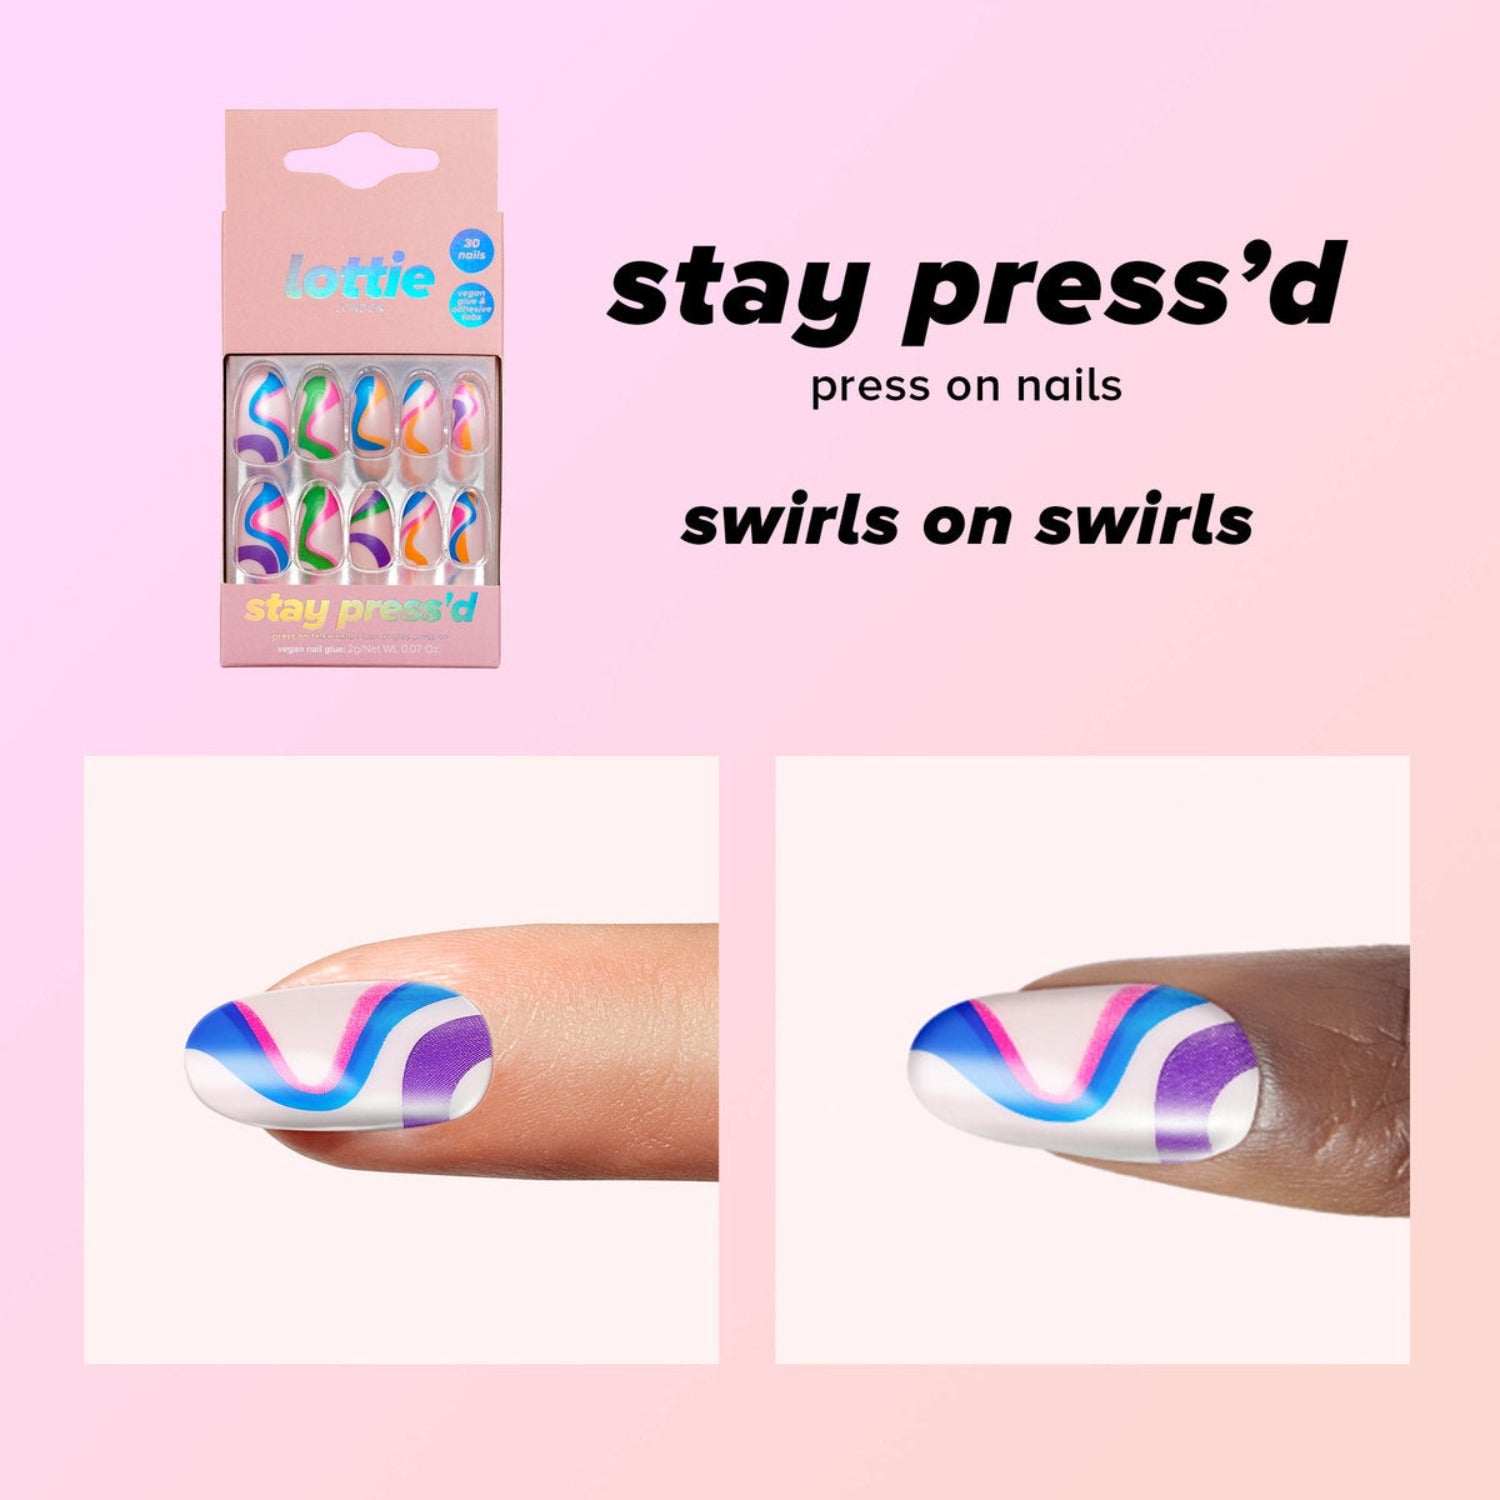 stay press'd - swirls on swirls